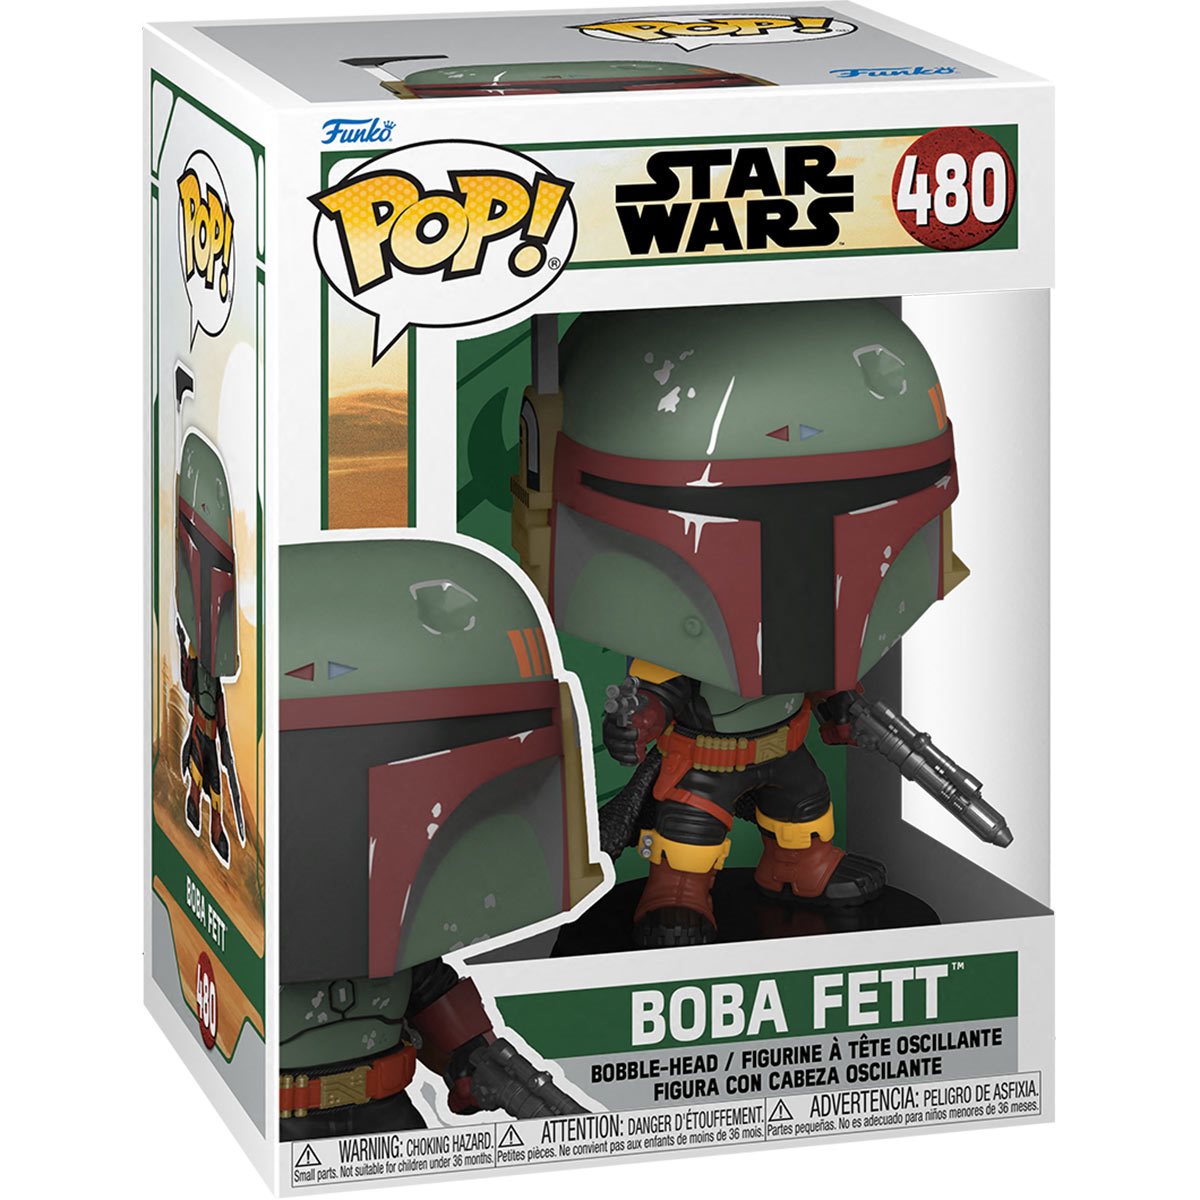 Star Wars: Book Of Boba Fett #480 Pop! Vinyl Figure